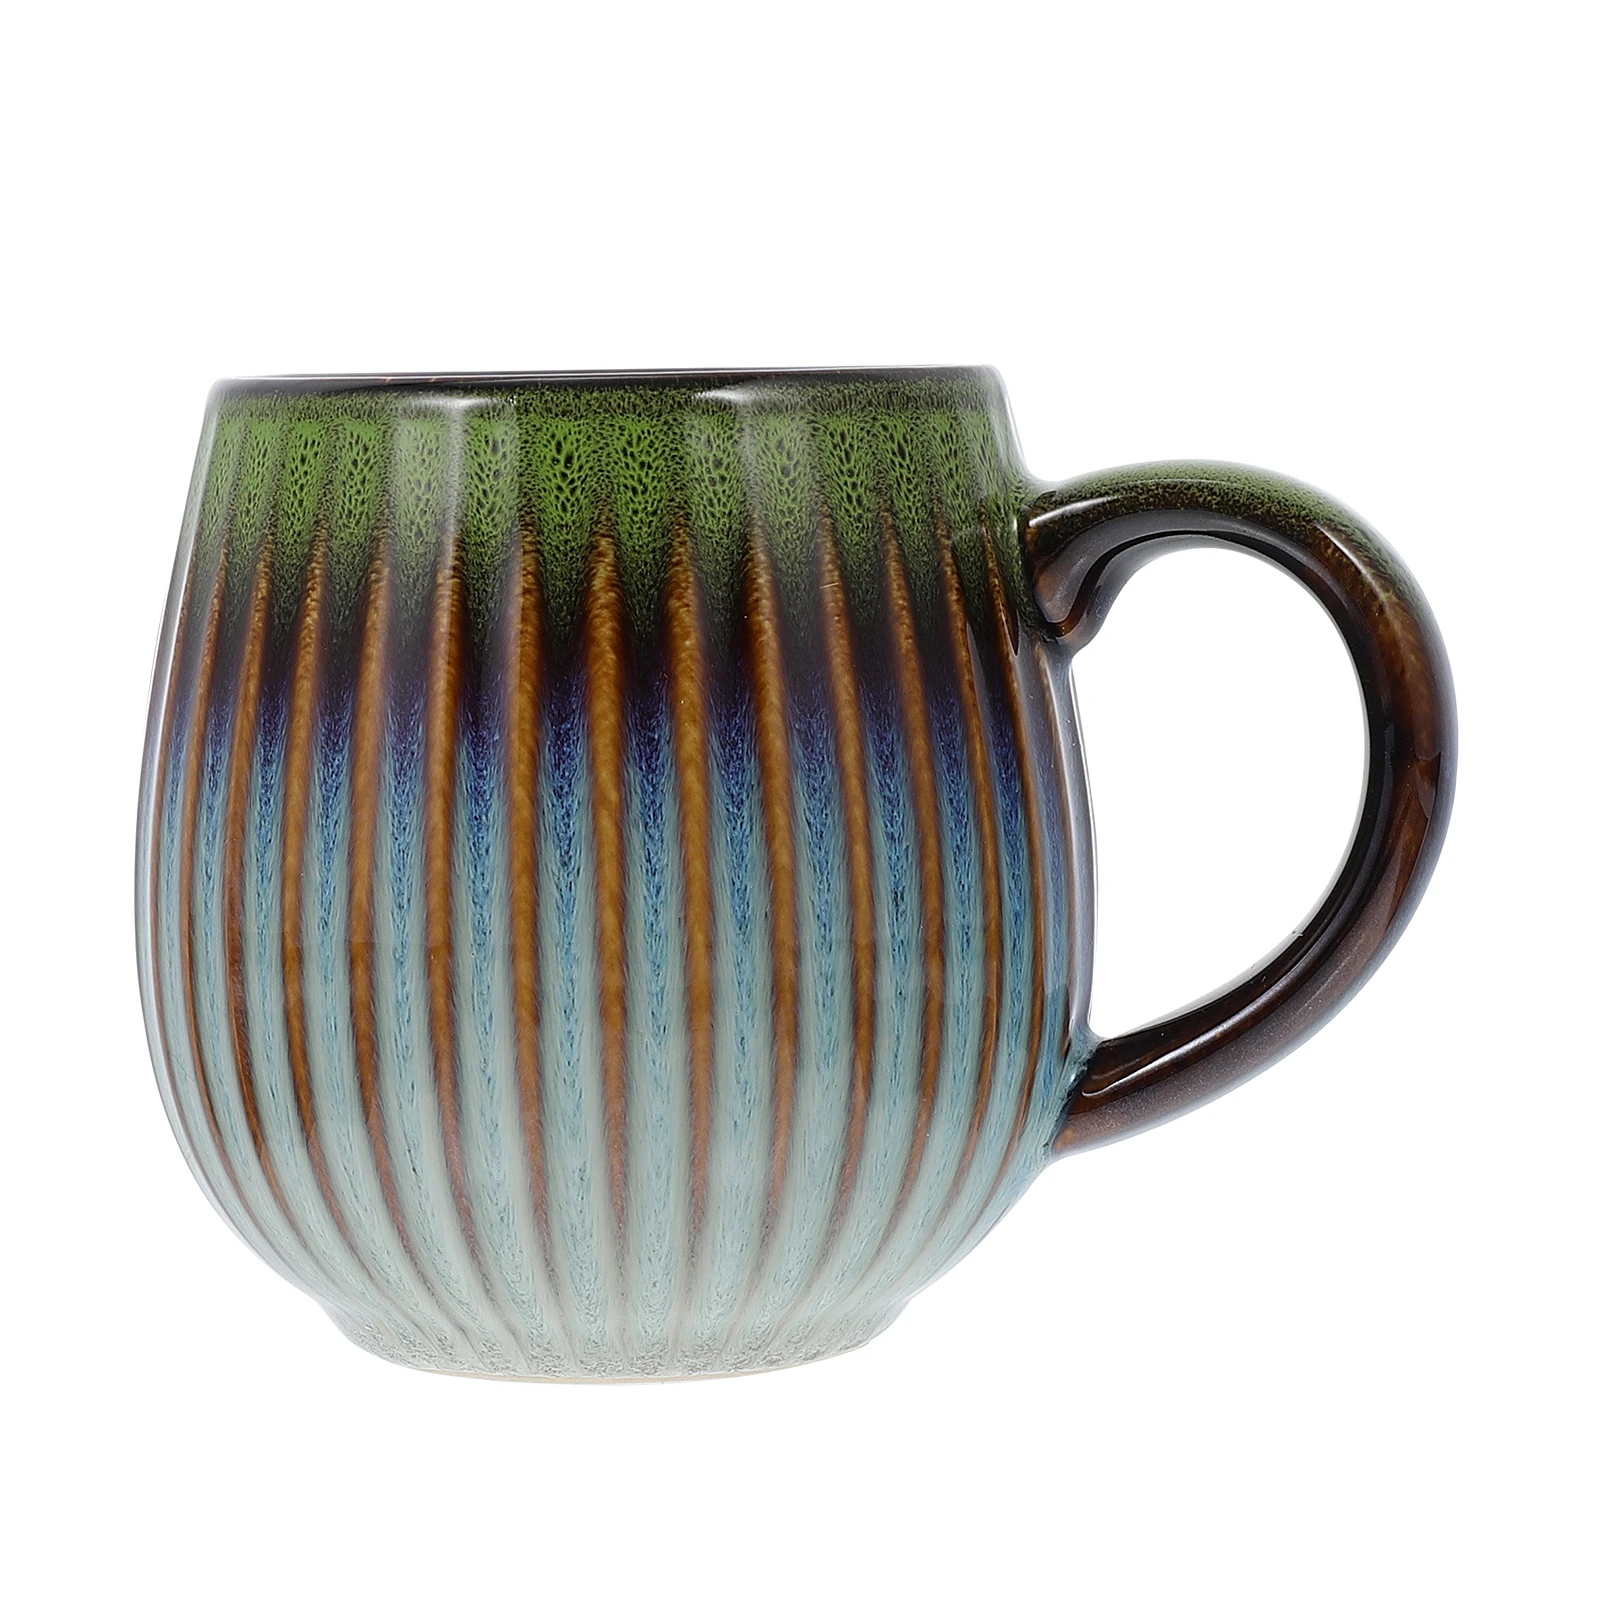 Practical Ceramic Coffee Mugs 